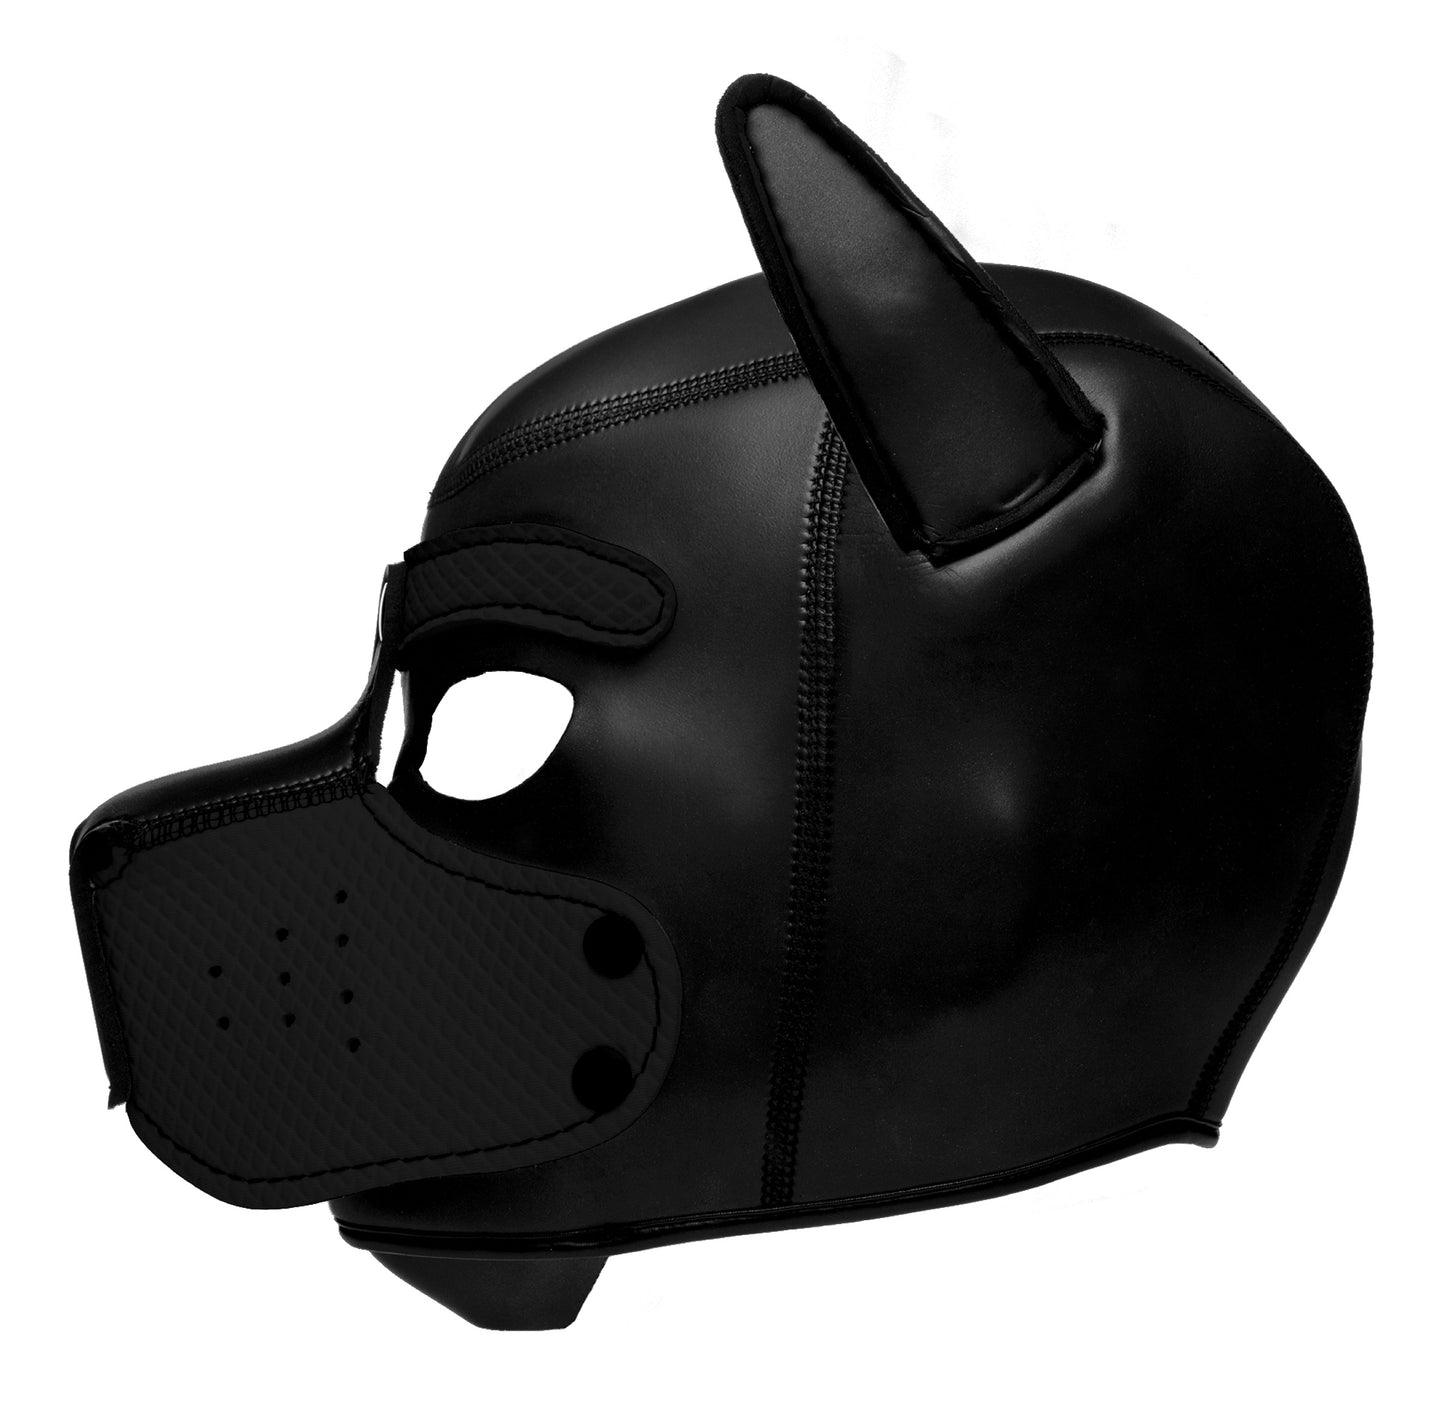 Spike Neoprene Puppy Hood - Black - UABDSM